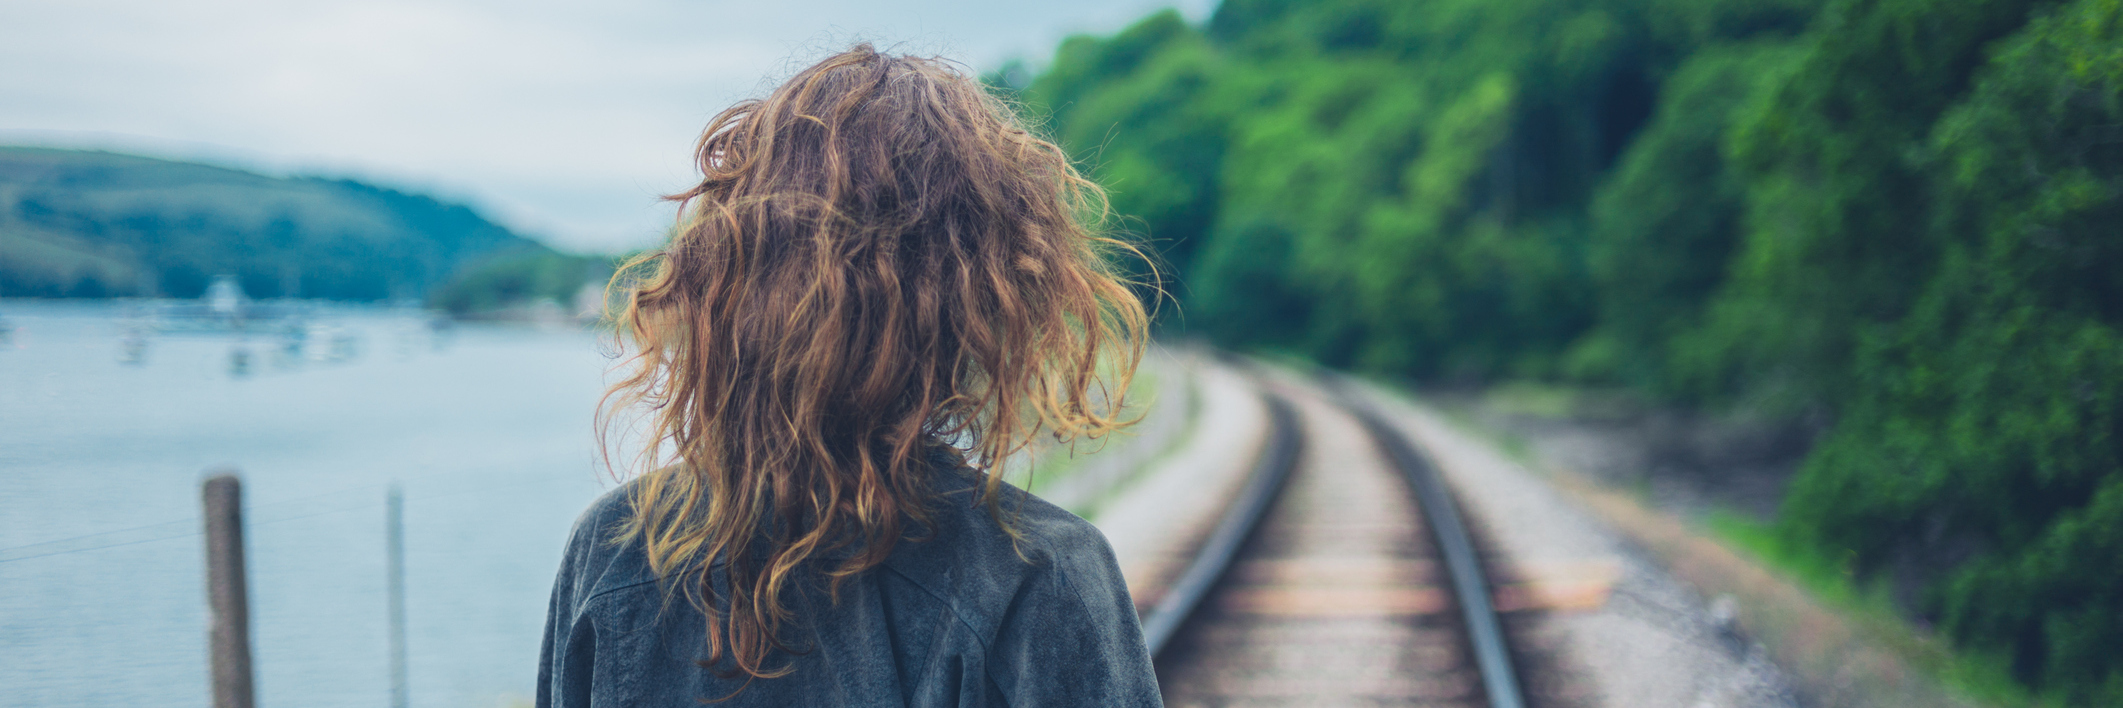 young woman walking along railroad tracks